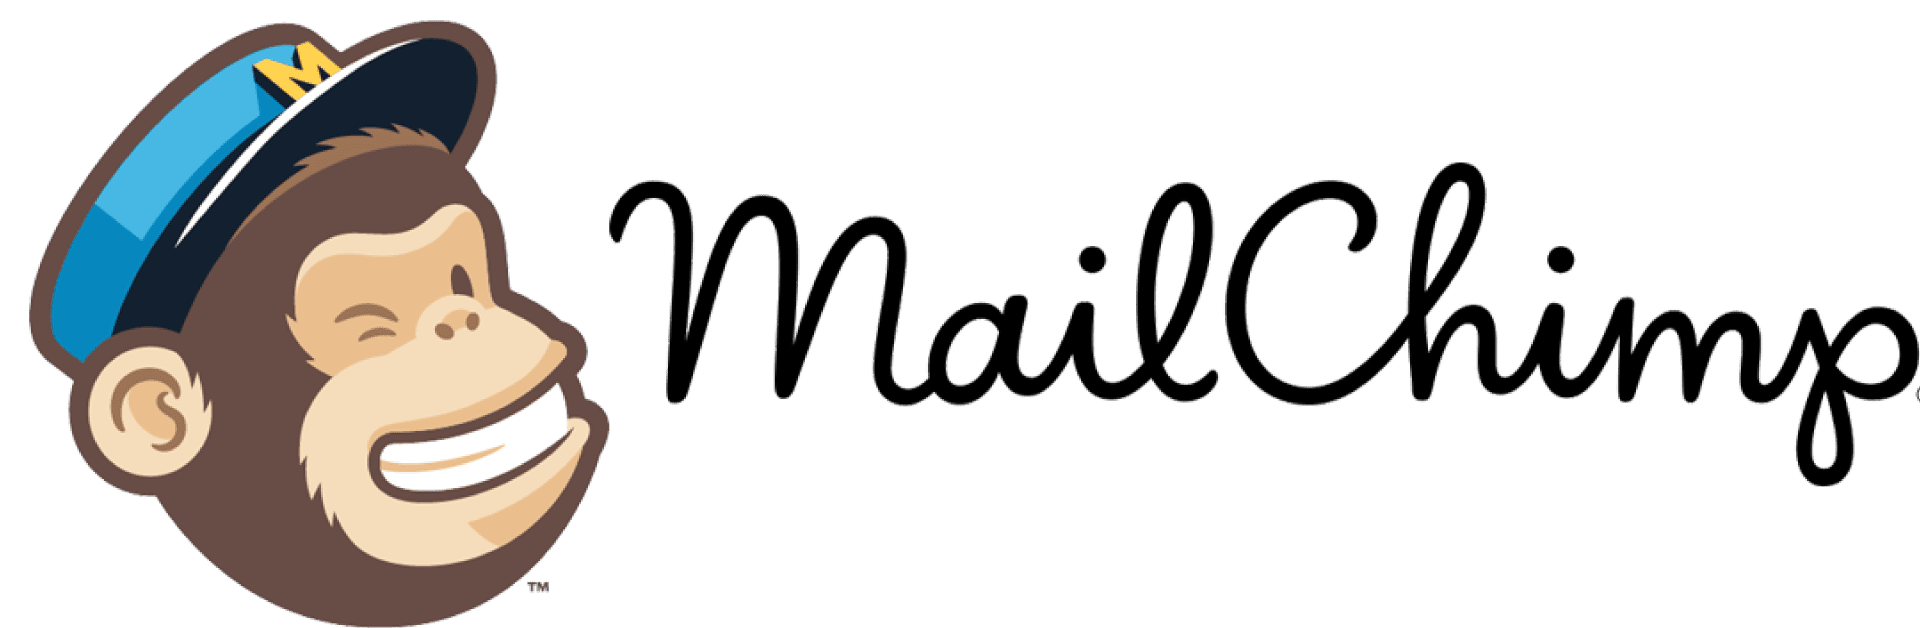 zoho vs mailchimp, mailchimp vs zoho, zoho campaigns vs mailchimp, zoho crm vs mailchimp, zoho email vs mailchimp, zoho one vs Mailchimp